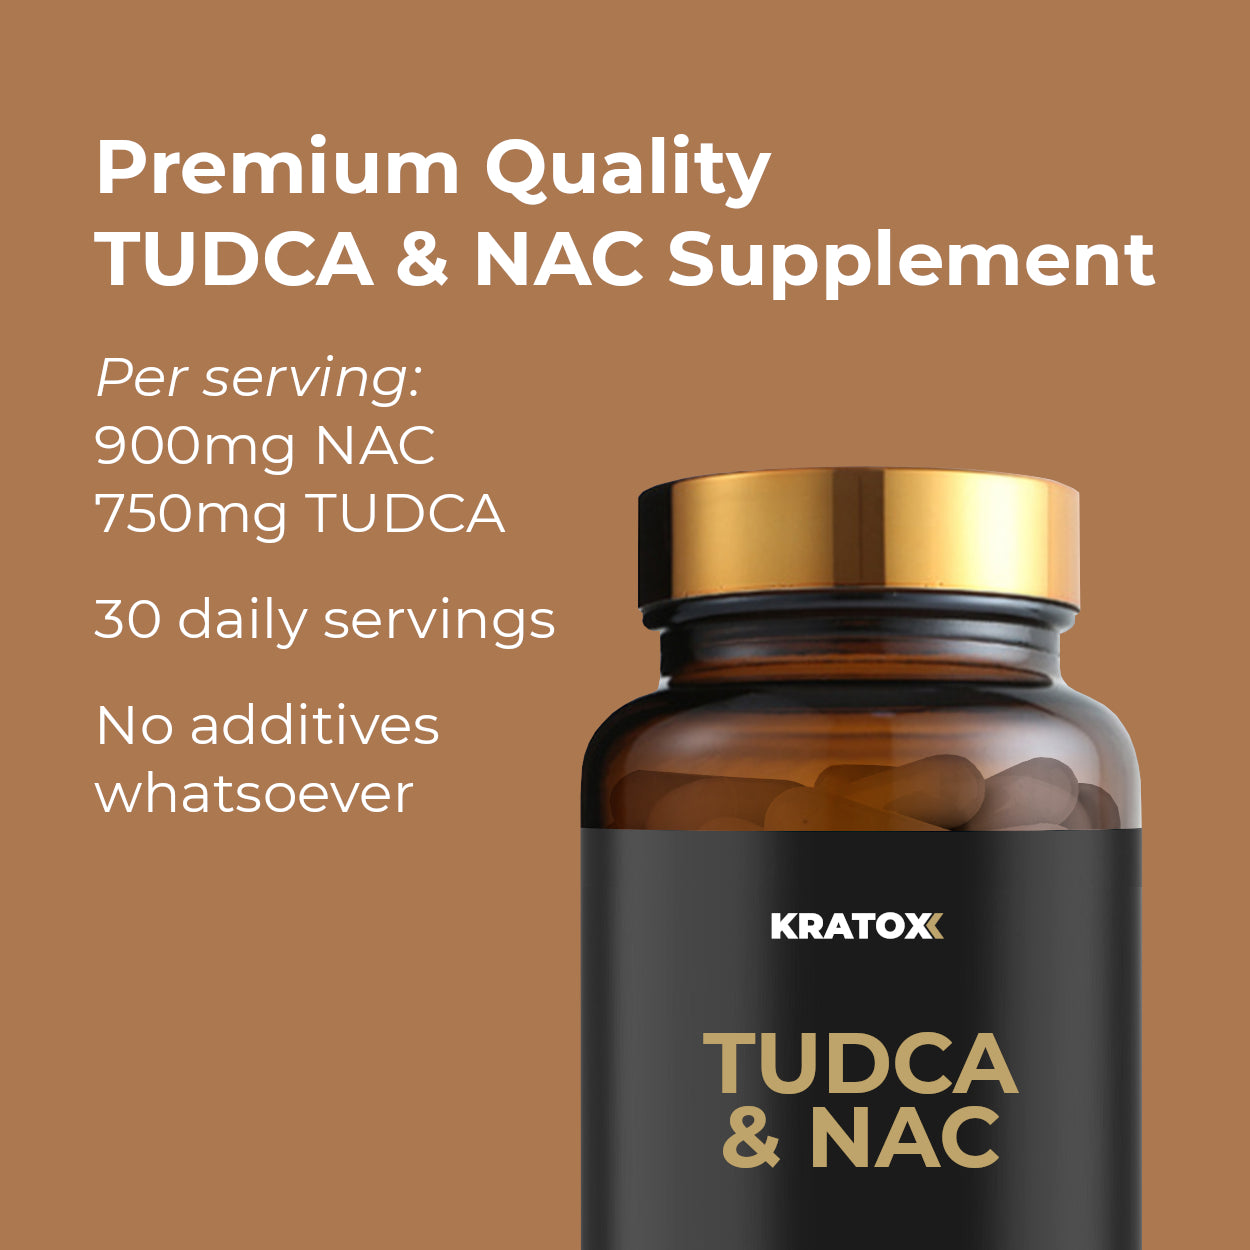 TUDCA & NAC supplement